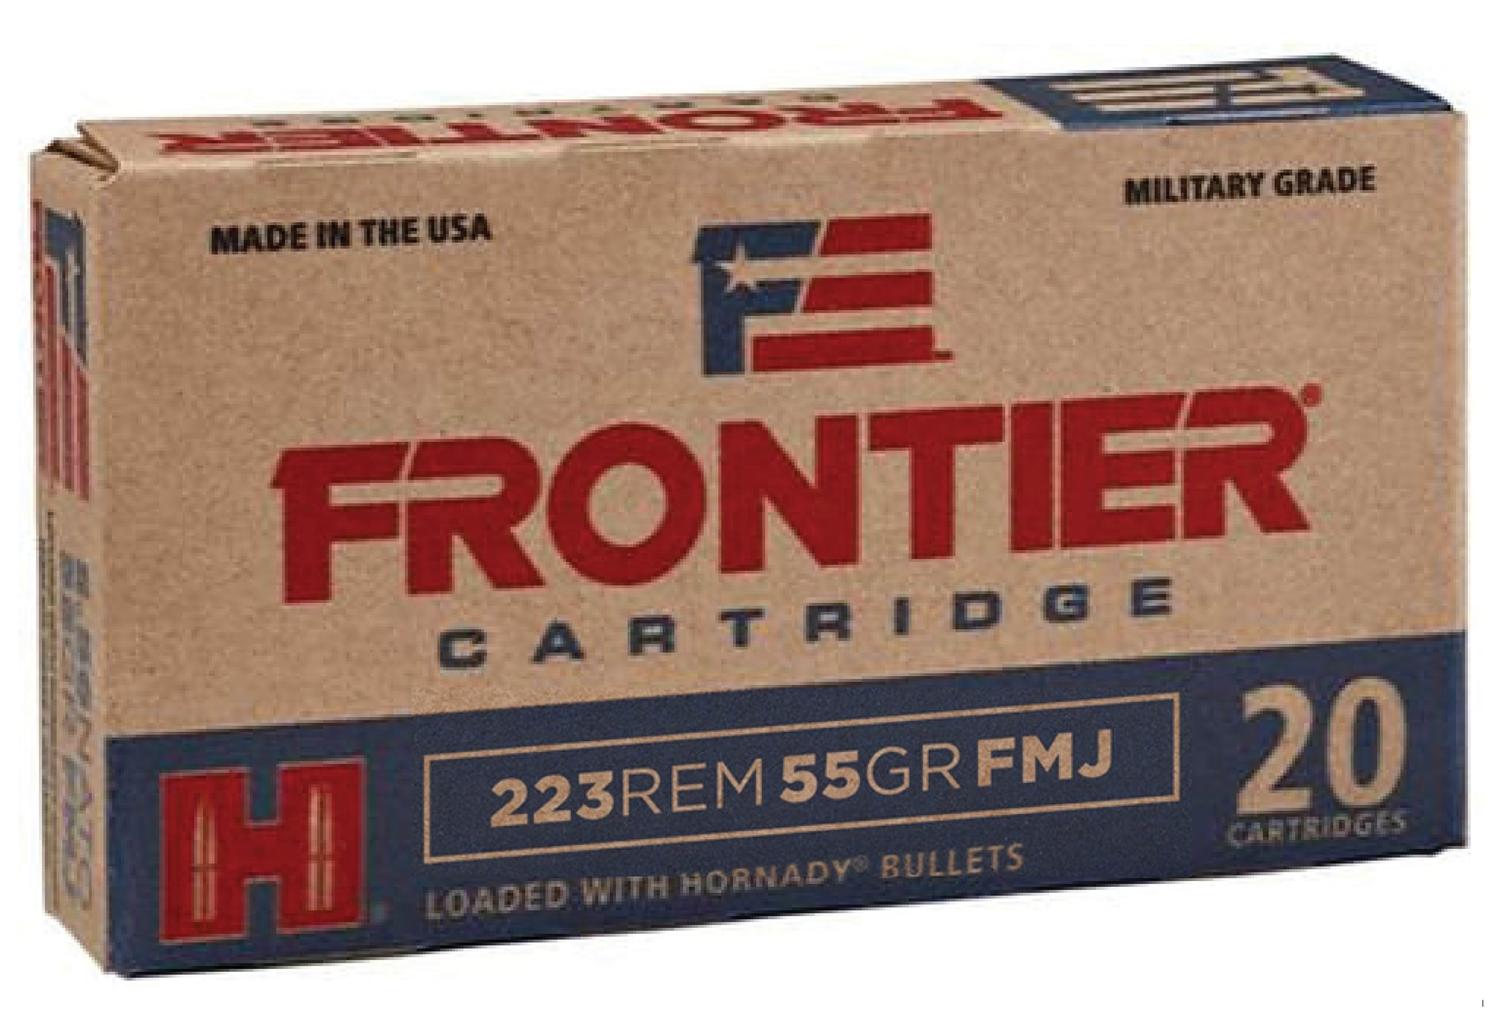  Frontier 223 Remington 55 Gr Full Metal Jacket (Fmj) 20 Bx